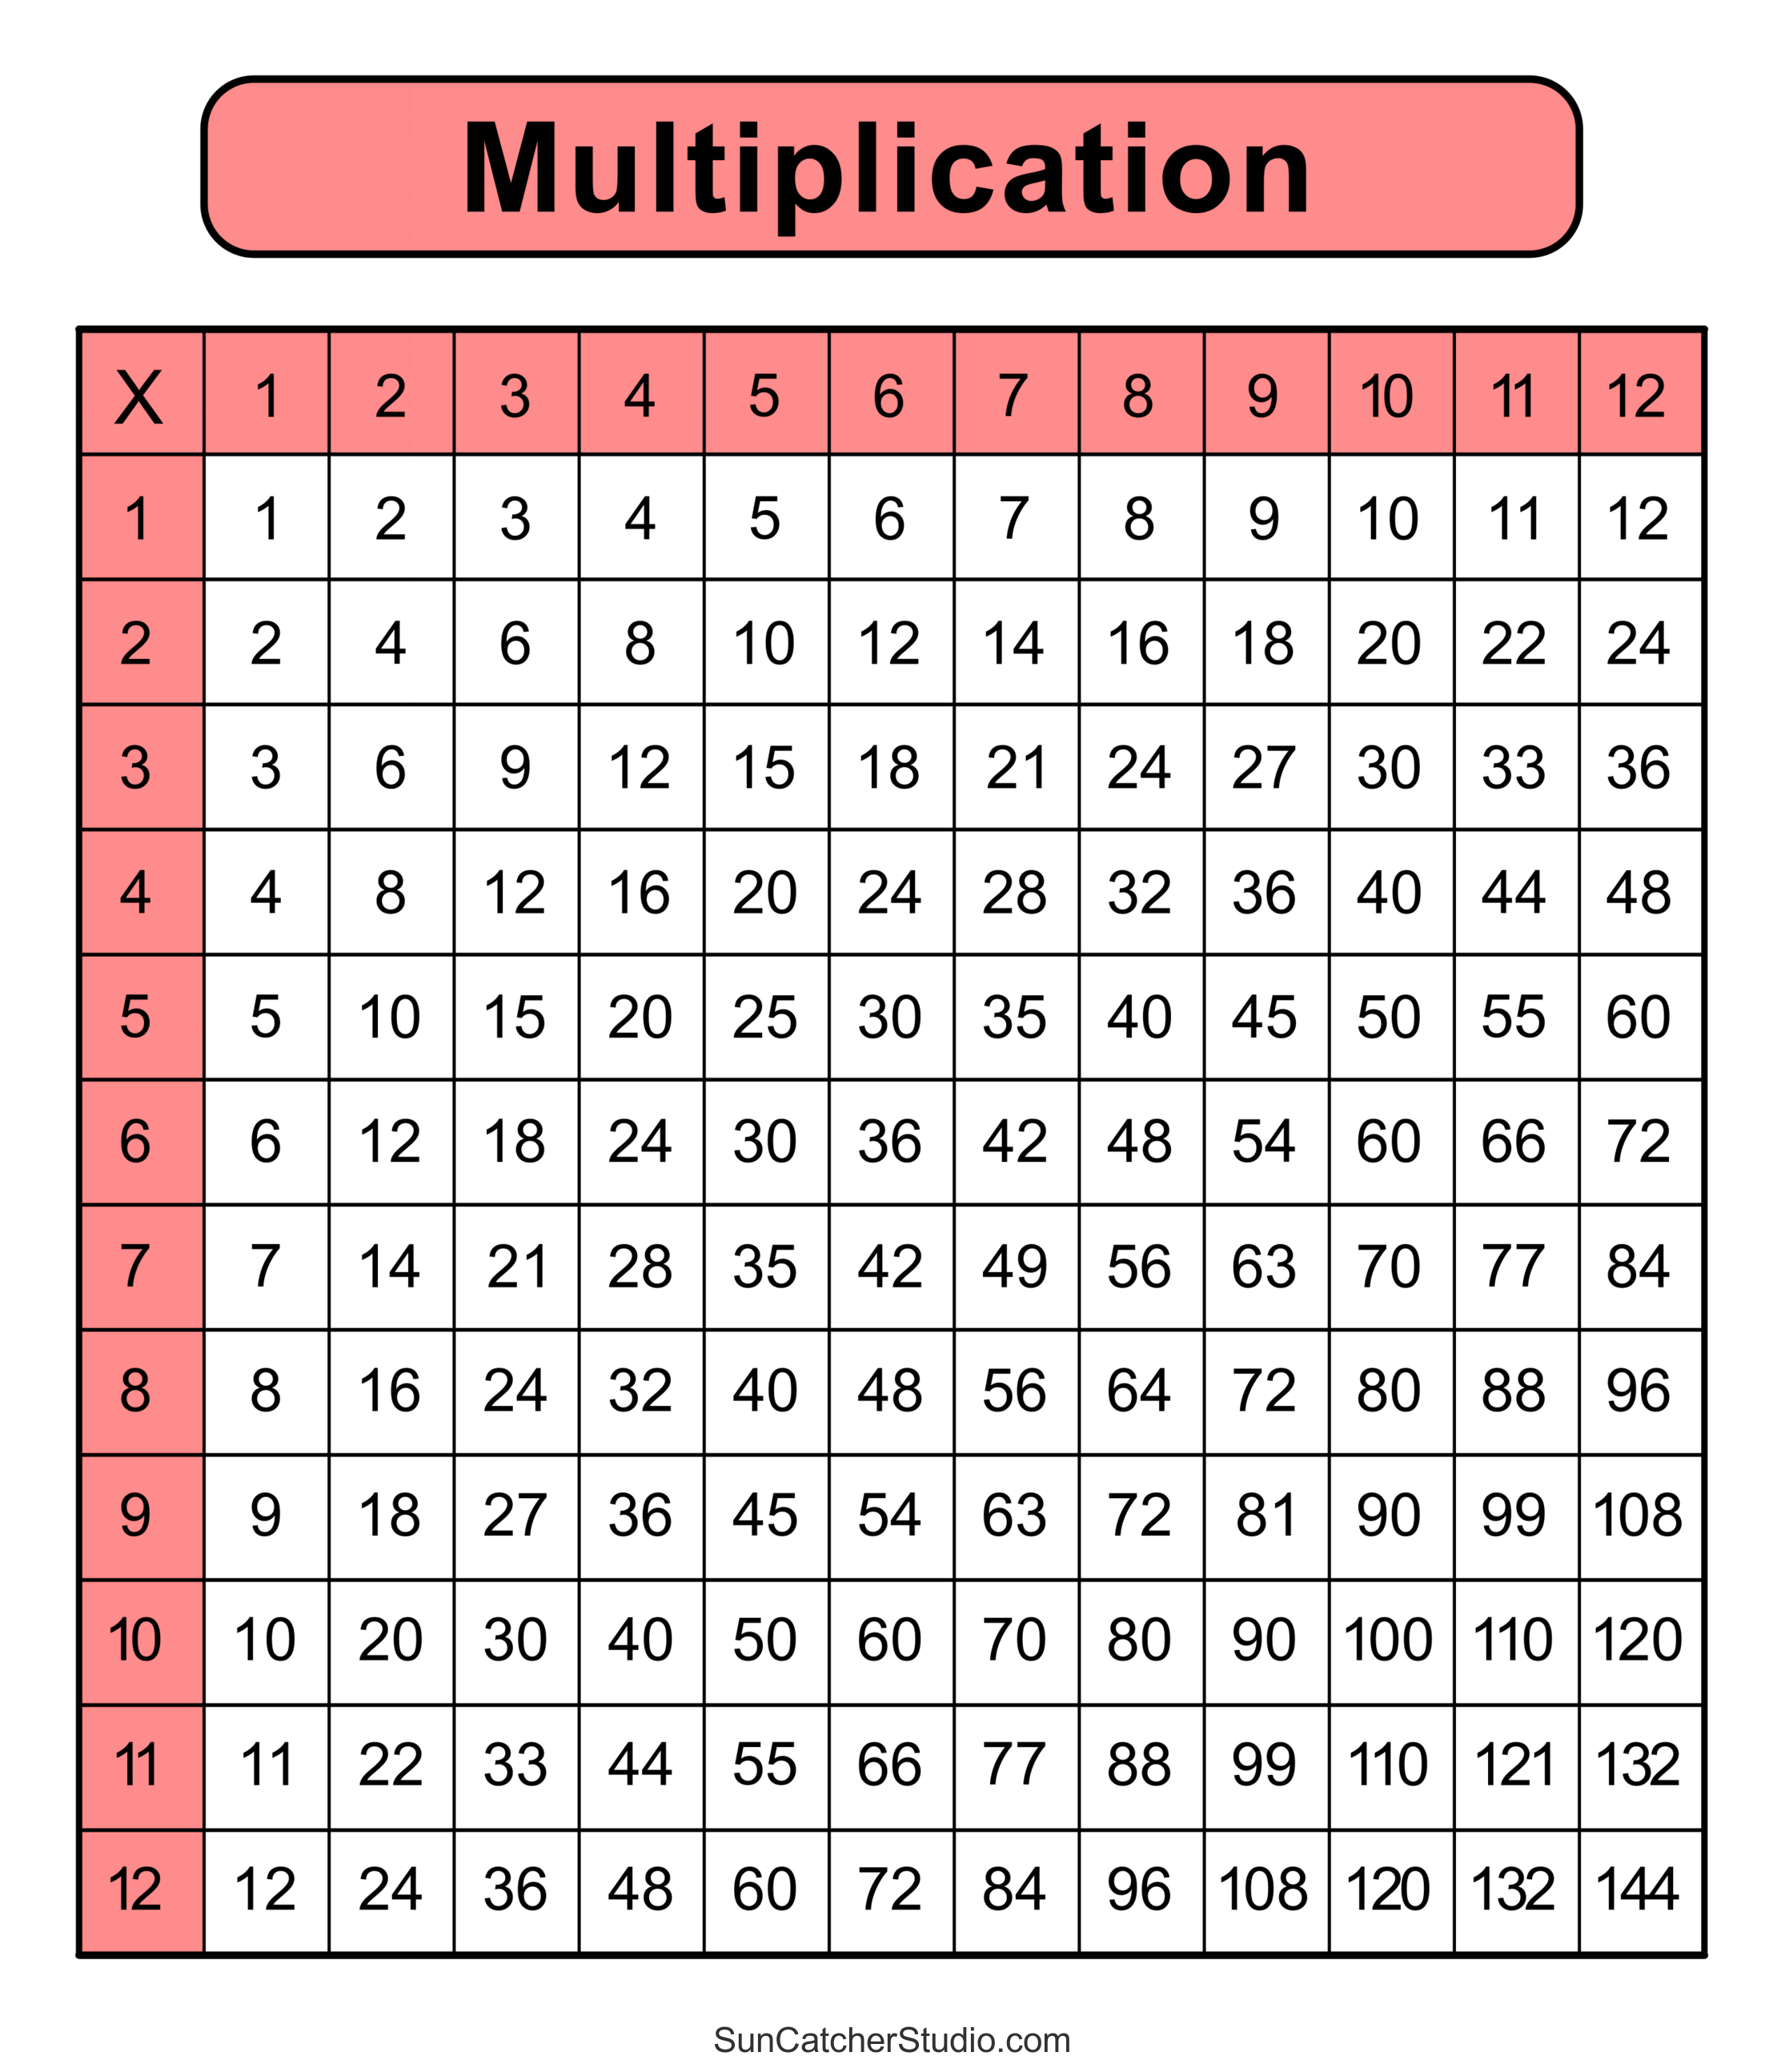 Multiplication Table 1 20 Free Printable PDF 45% OFF